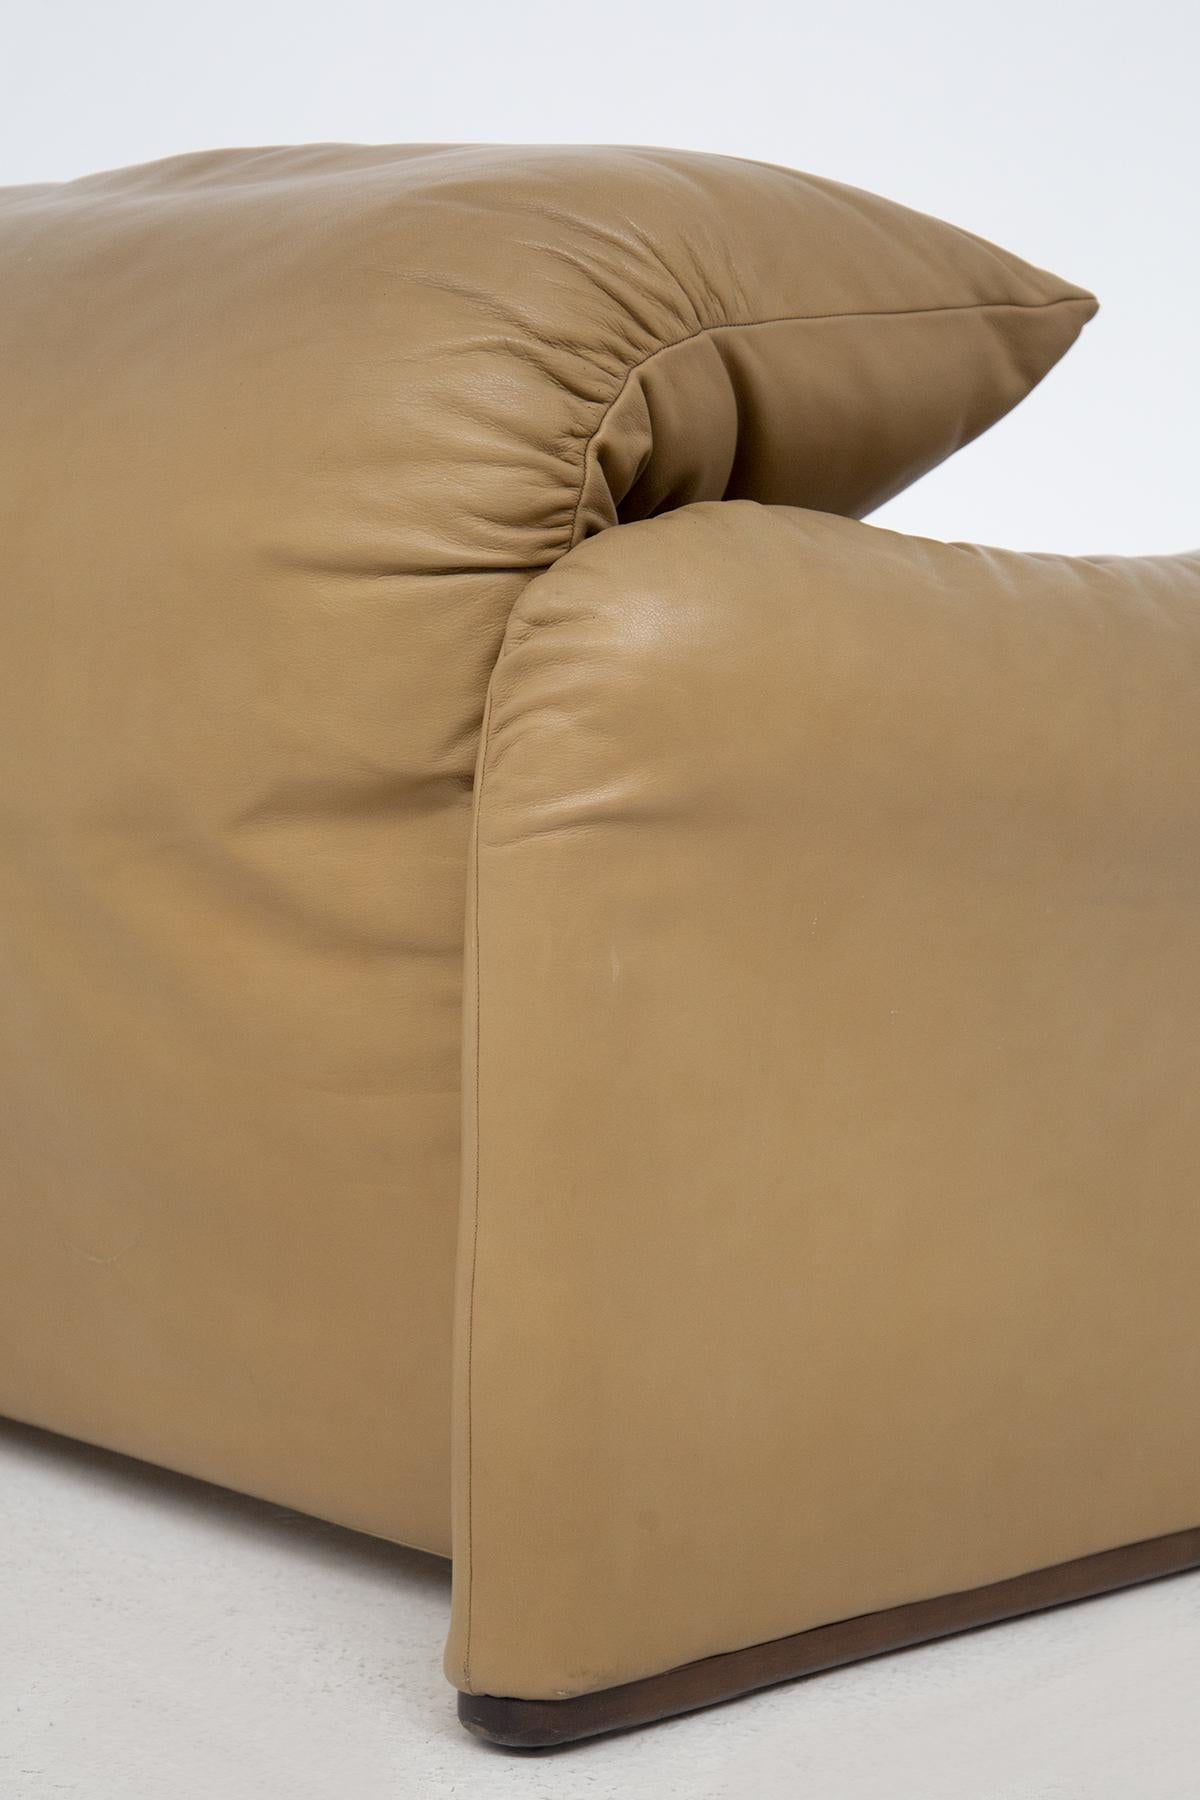 Maralunga Vintage Leather Sofa by Vico Magistretti for Cassina 4